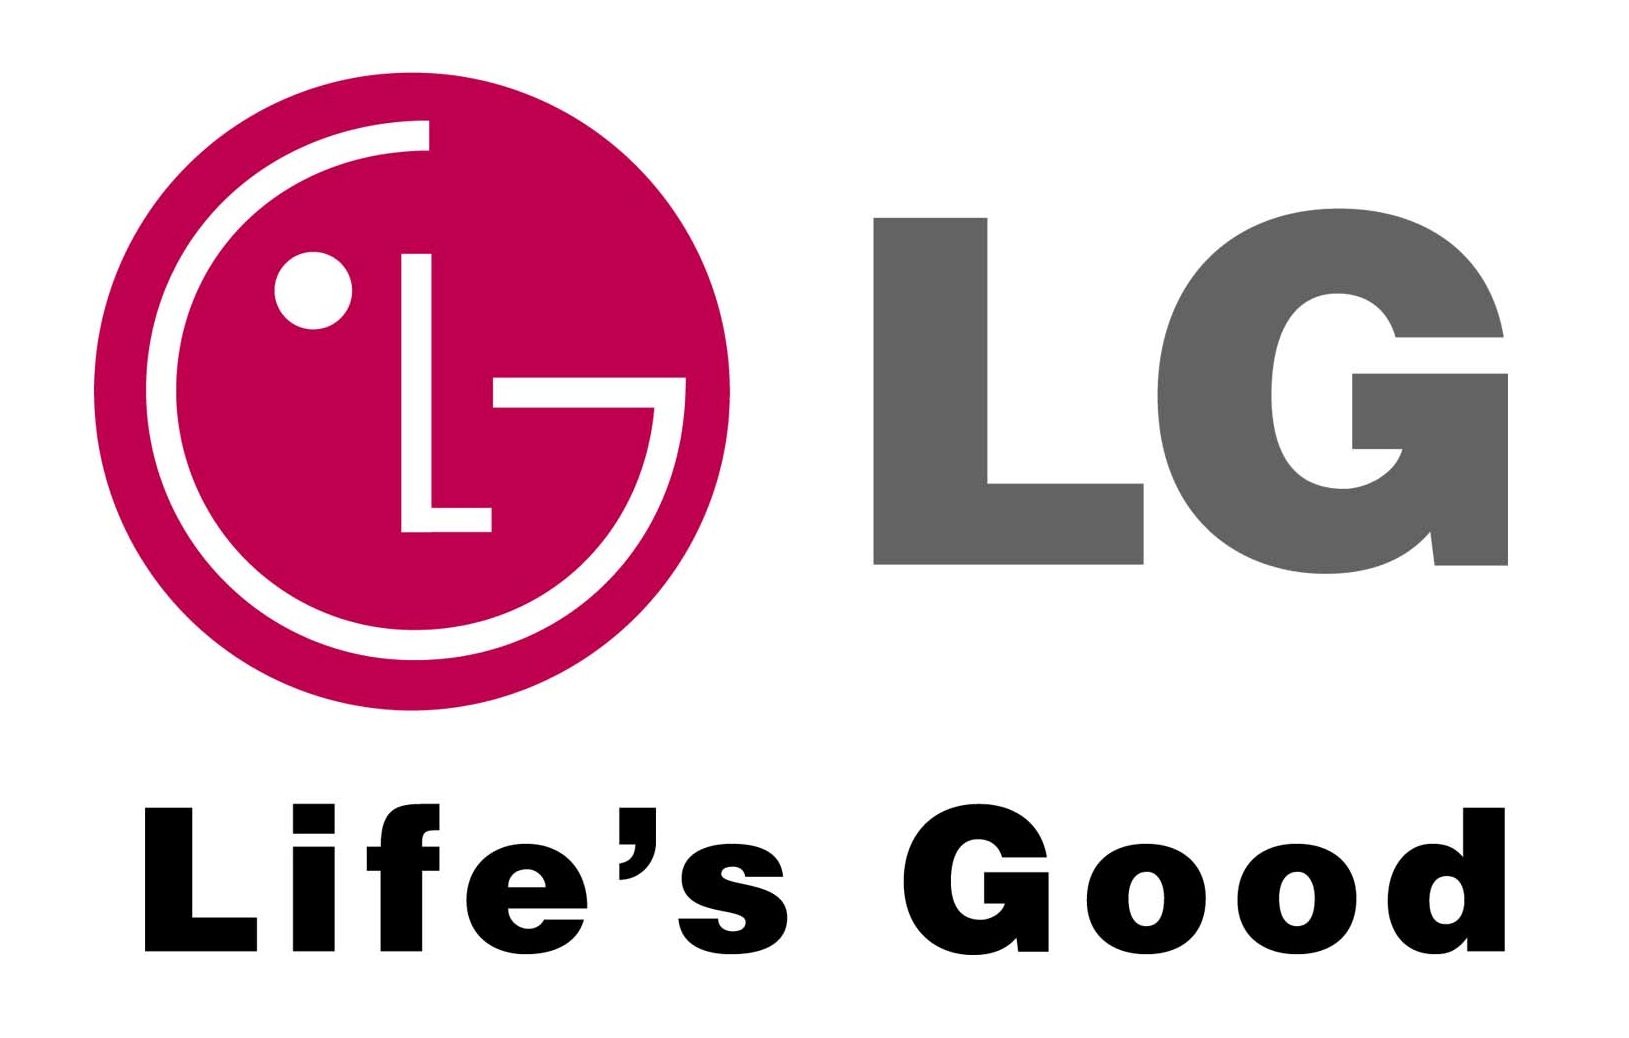 LG LOGO - Global Air Conditioning